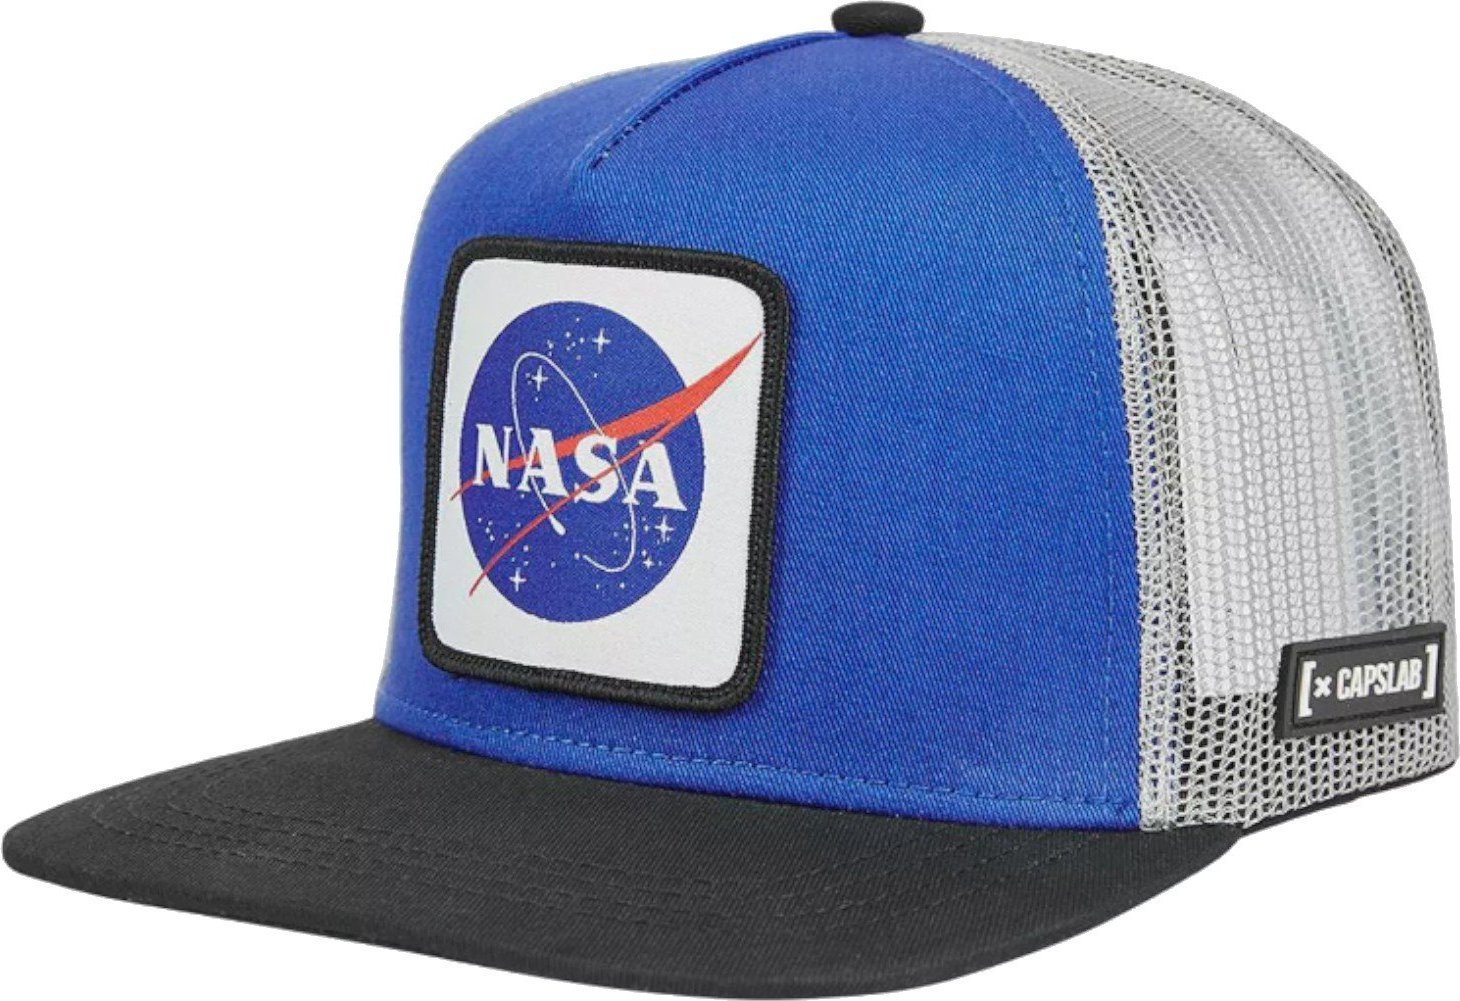 Capslab Capslab Space Mission NASA Snapback Cap CL-NASA-1-US1 Niebieskie One size CL-NASA-1-US1 (3614001438099)